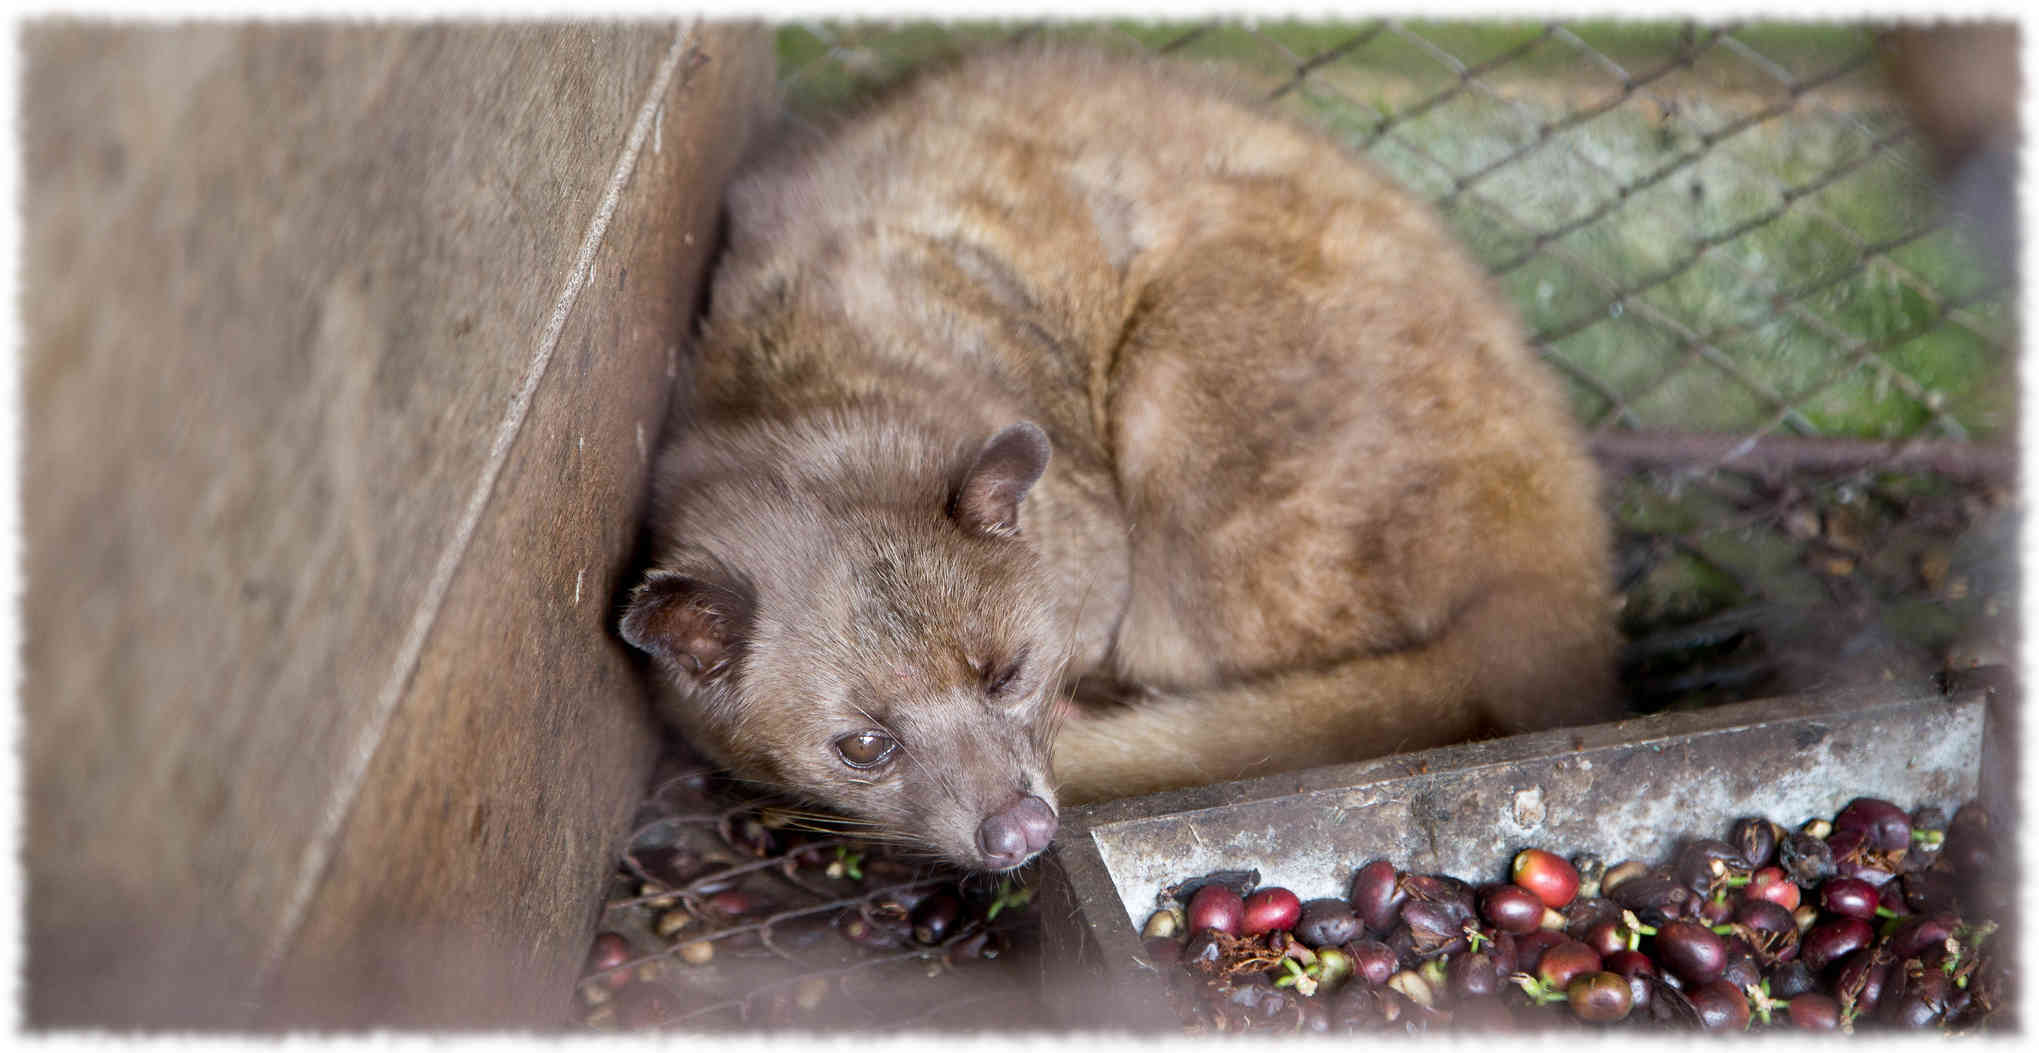 luwak civet cat - animal that eats coffee beans